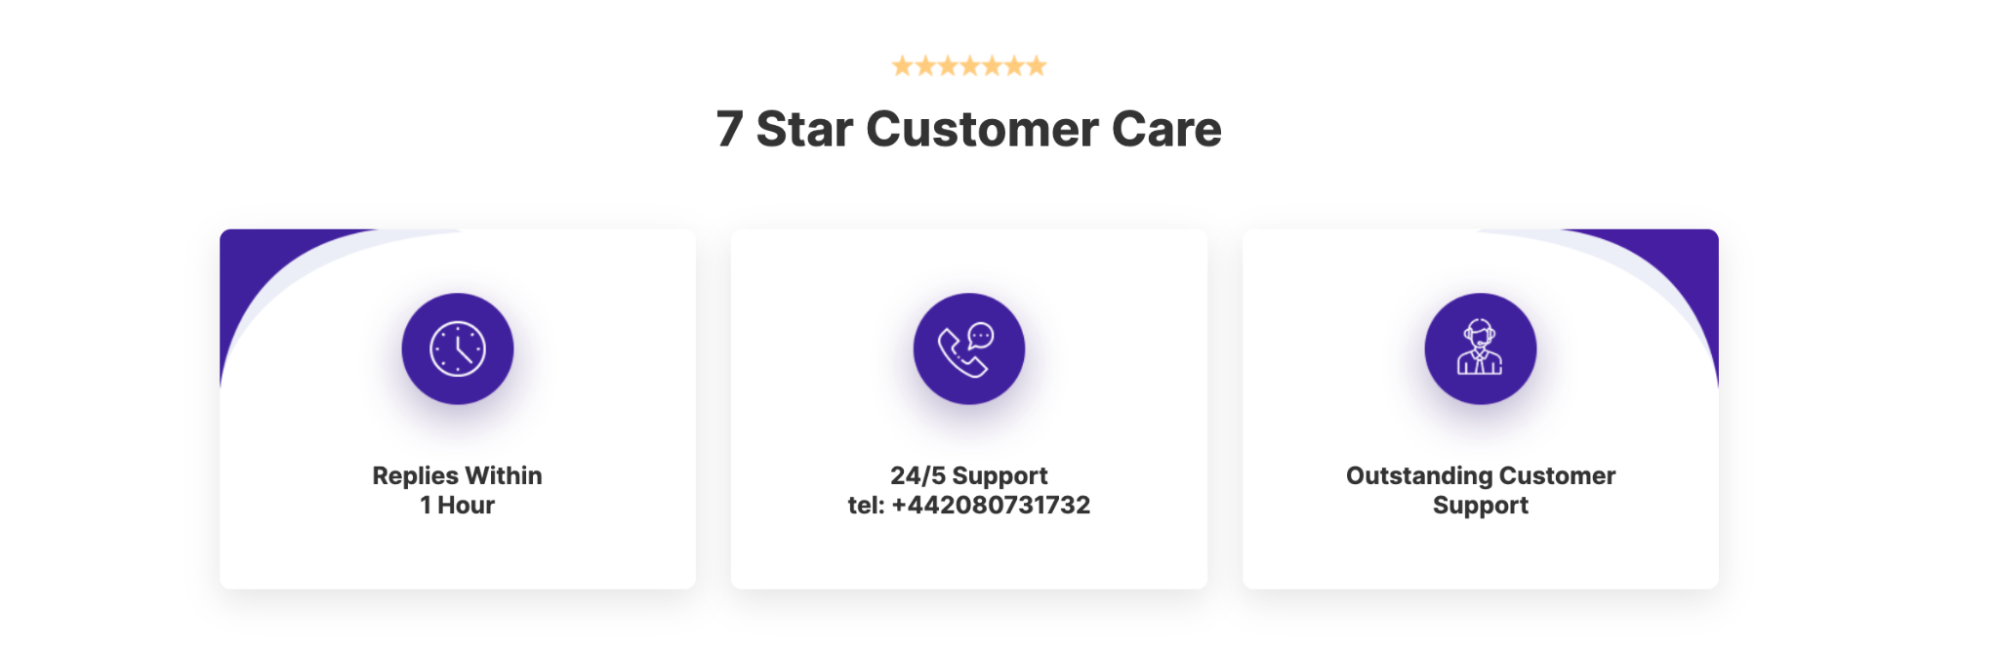 review Assets-Premium.com customer support